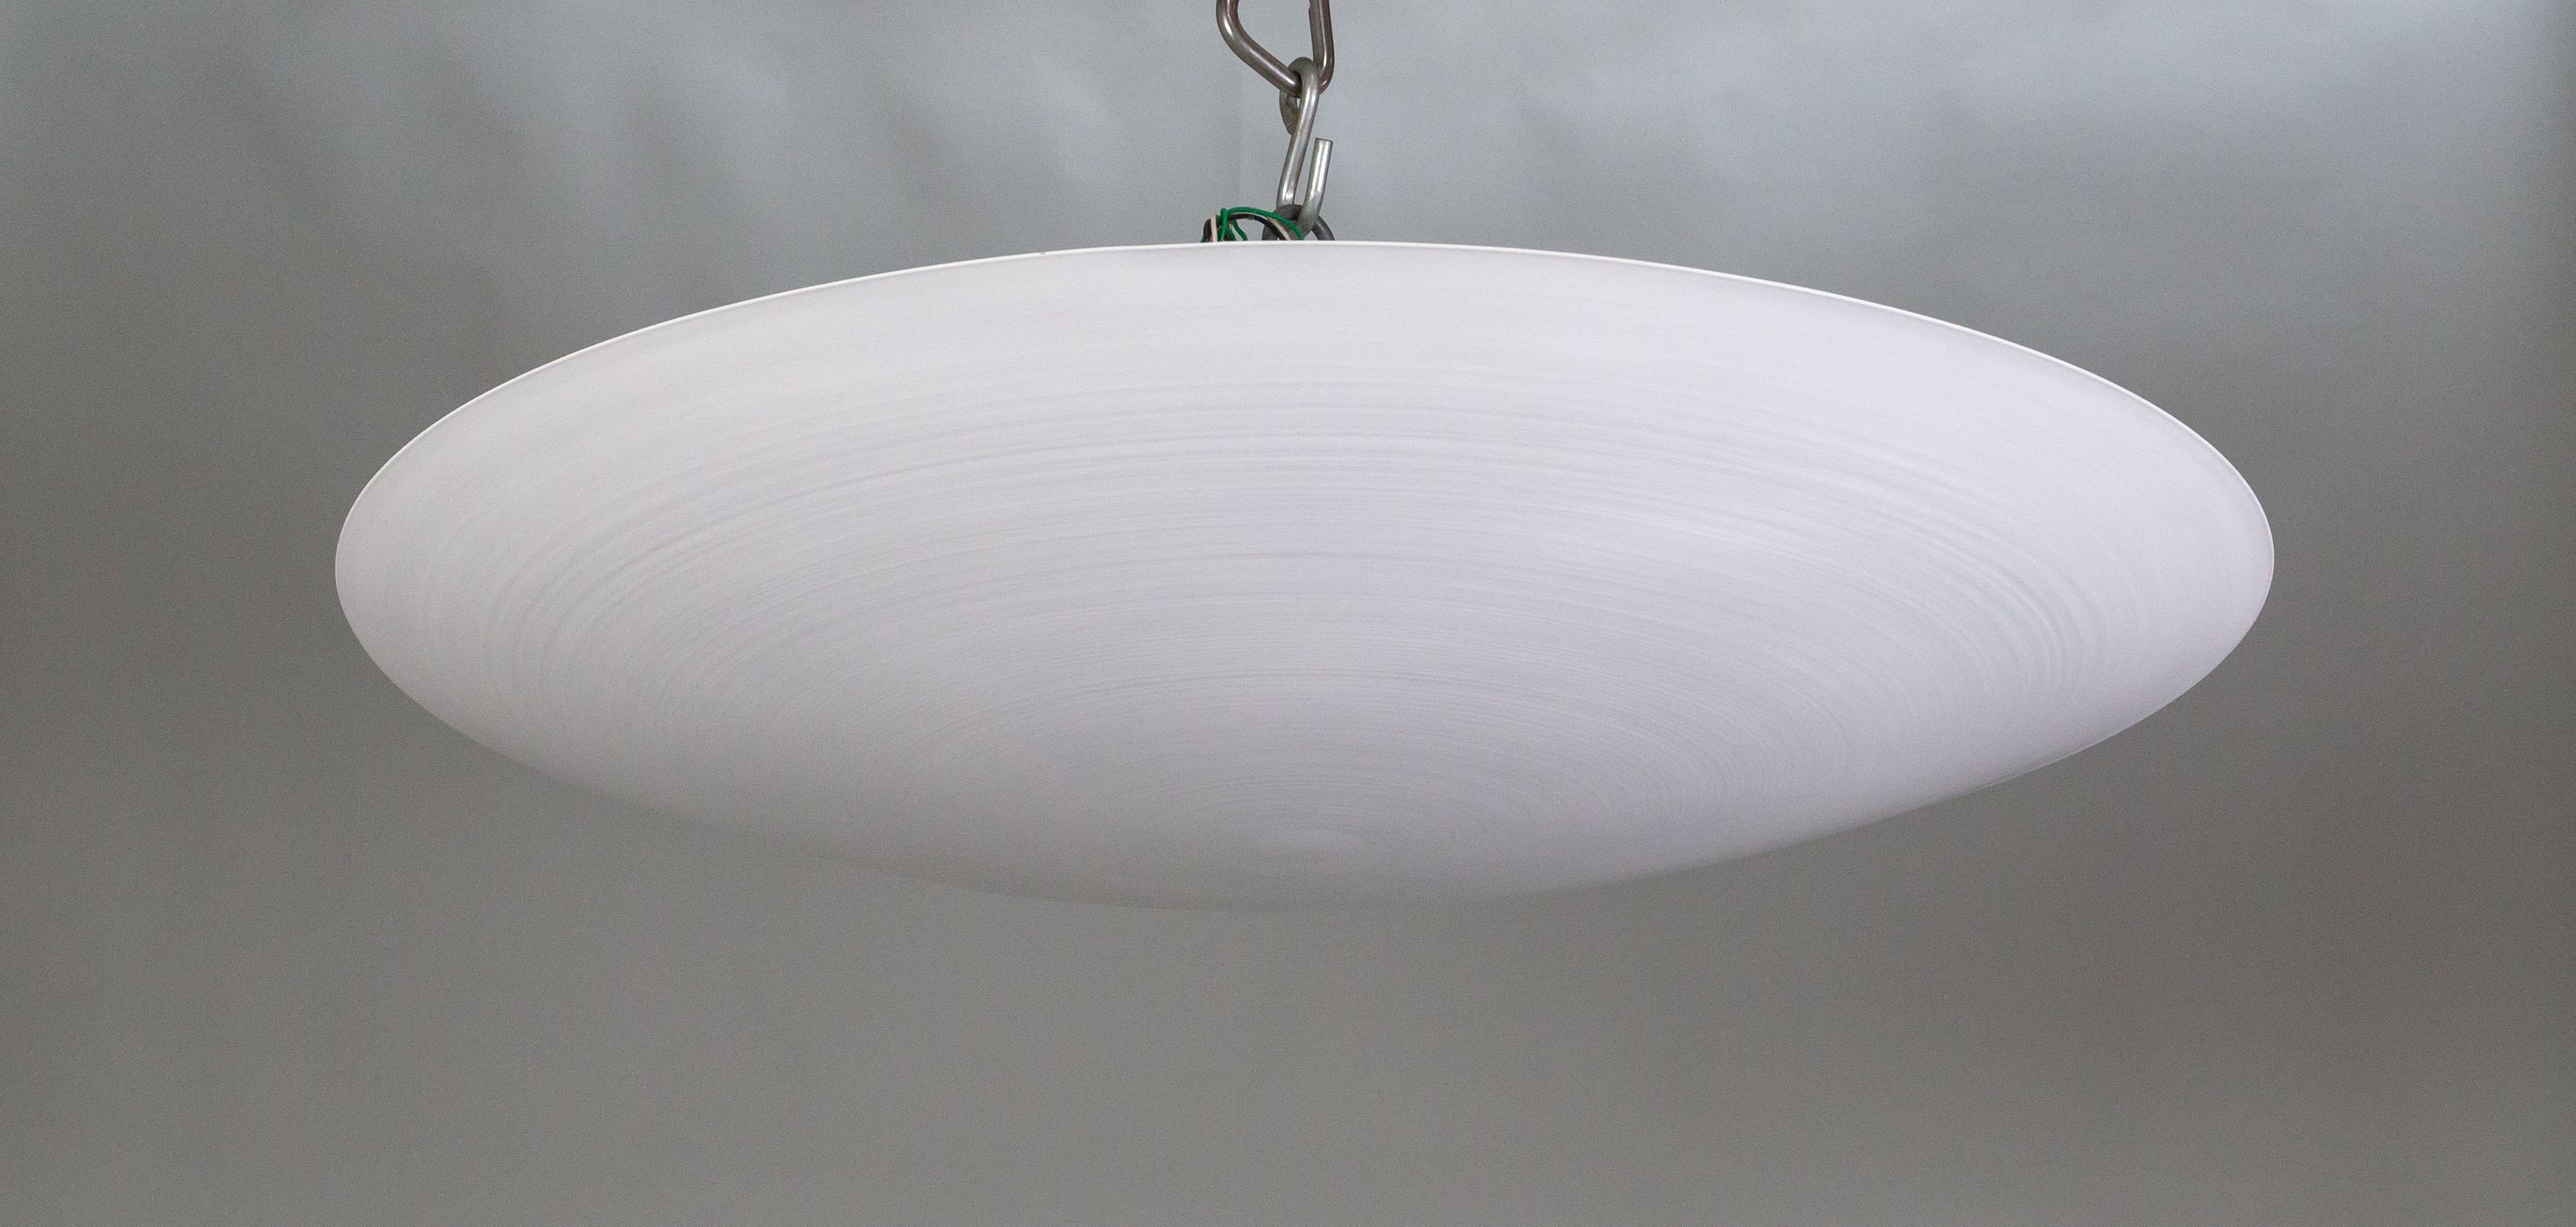 American Large Modern White Shallow Bowl Semi-Flush Mount Up-Light For Sale